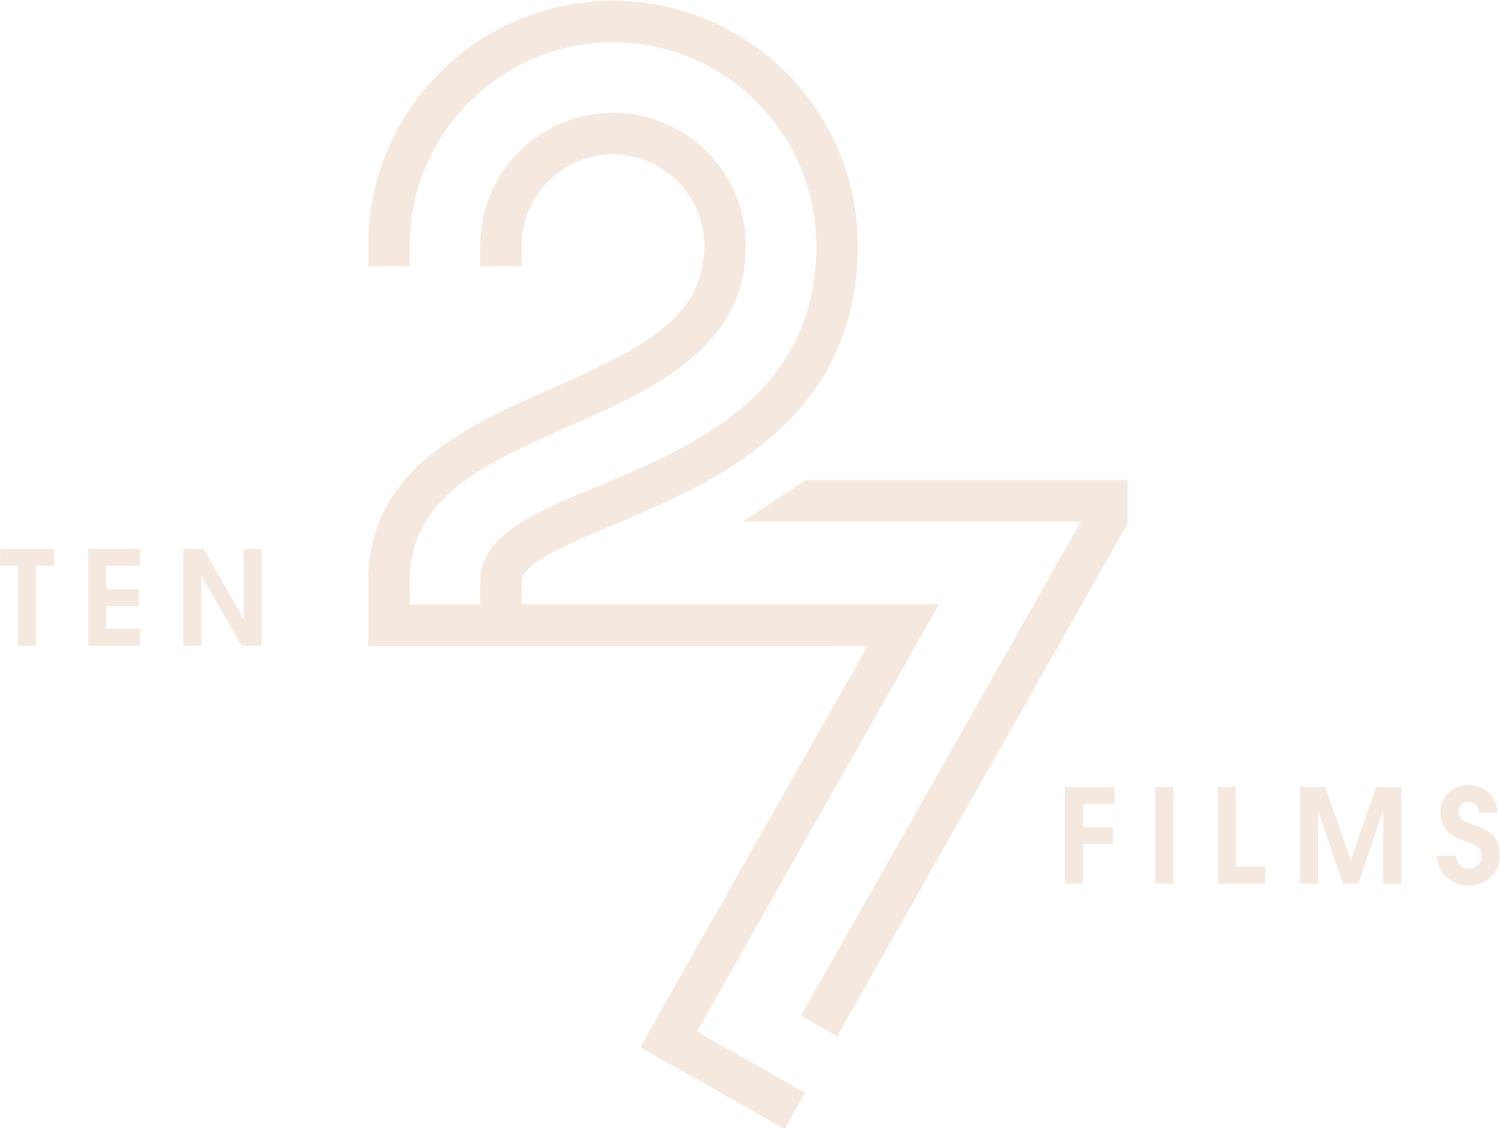 Ten 27 Films